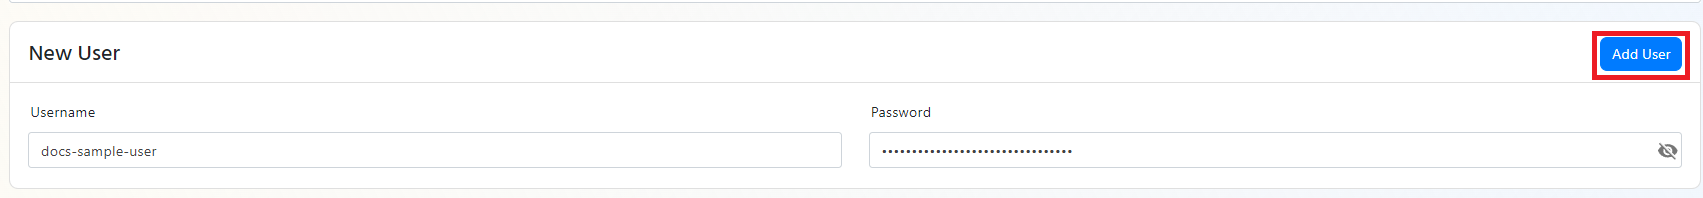 EZRADIUS Cloud RADIUS username and password add new user